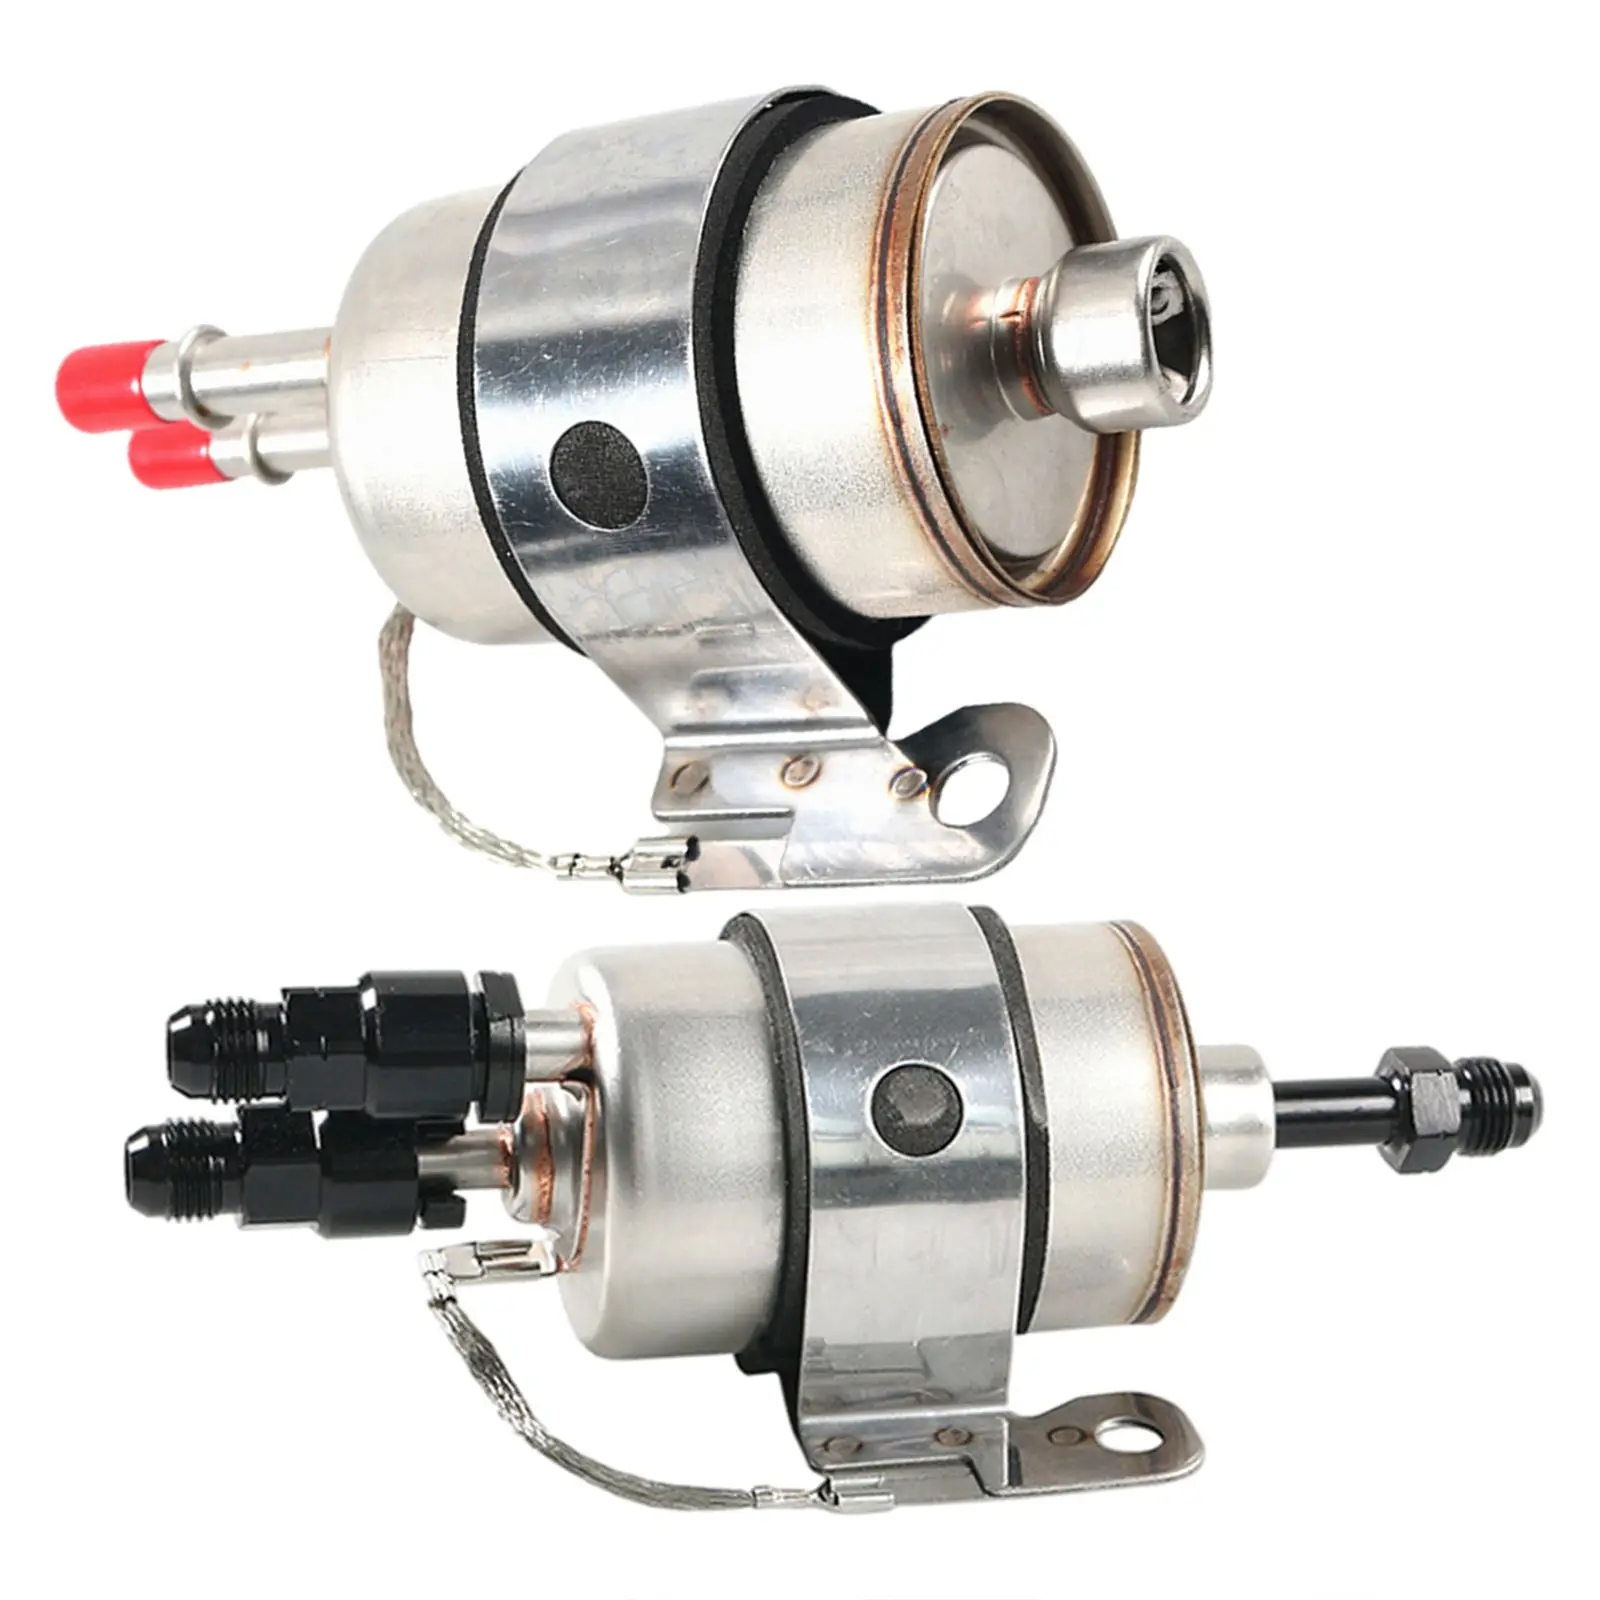 Fuel Filter Regulator Filter Assembly Pressure Regulator Lq4 Lq9 LM7 Fit for LS Conversion Car Engine LS1 LS2 LS6 LS3